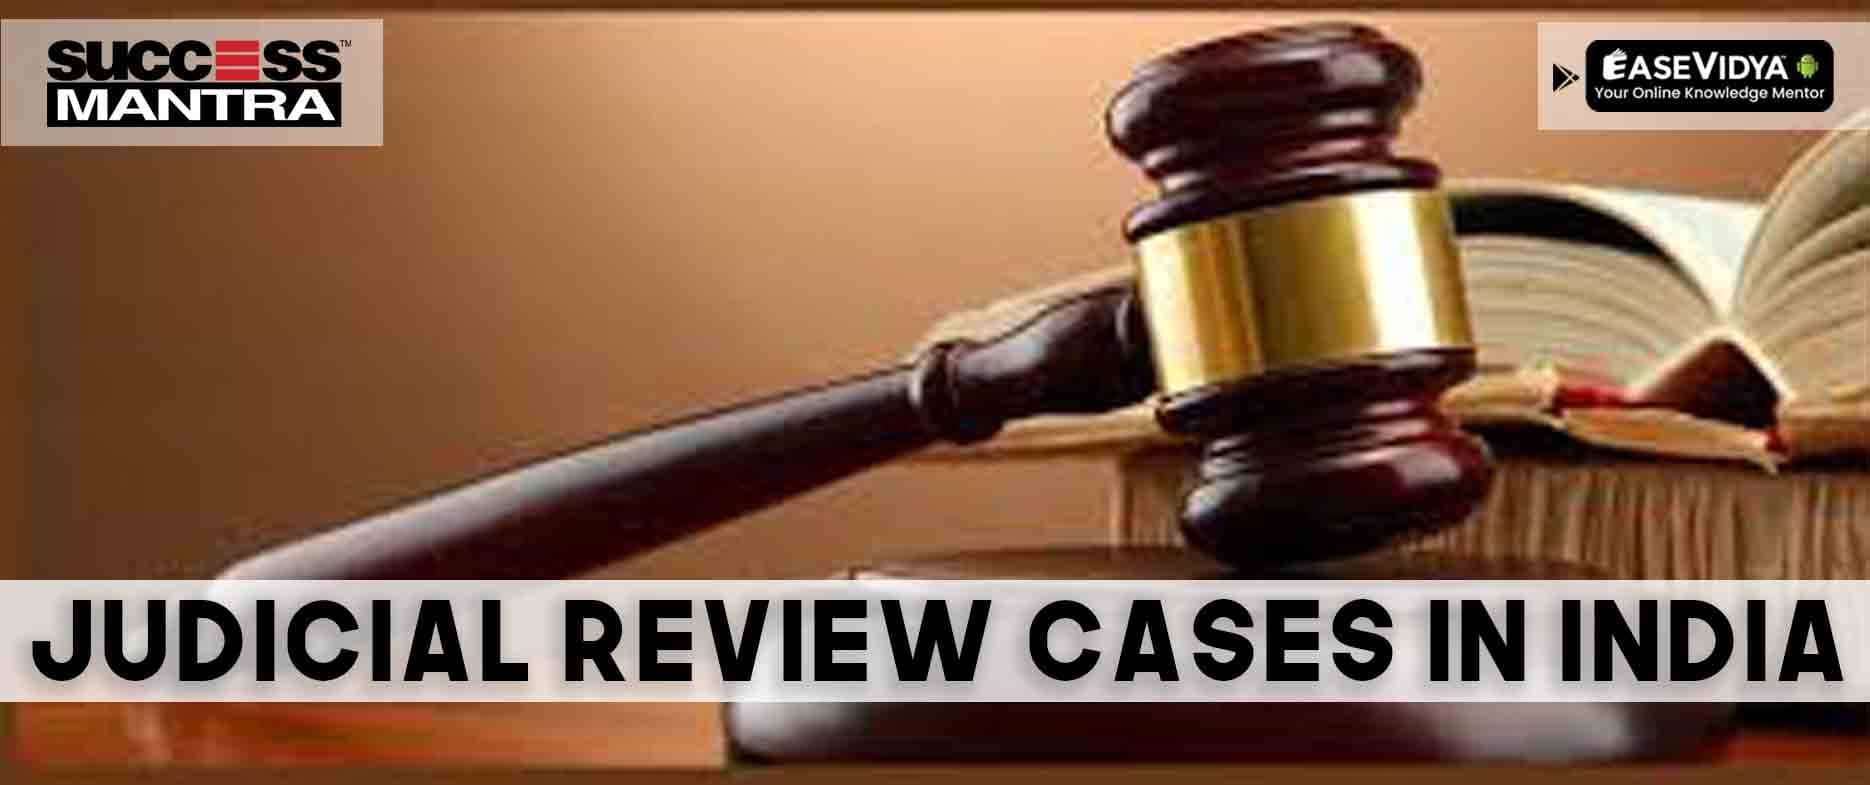 Judicial Review Cases in India: Exploring the Limitations of Judicial Review